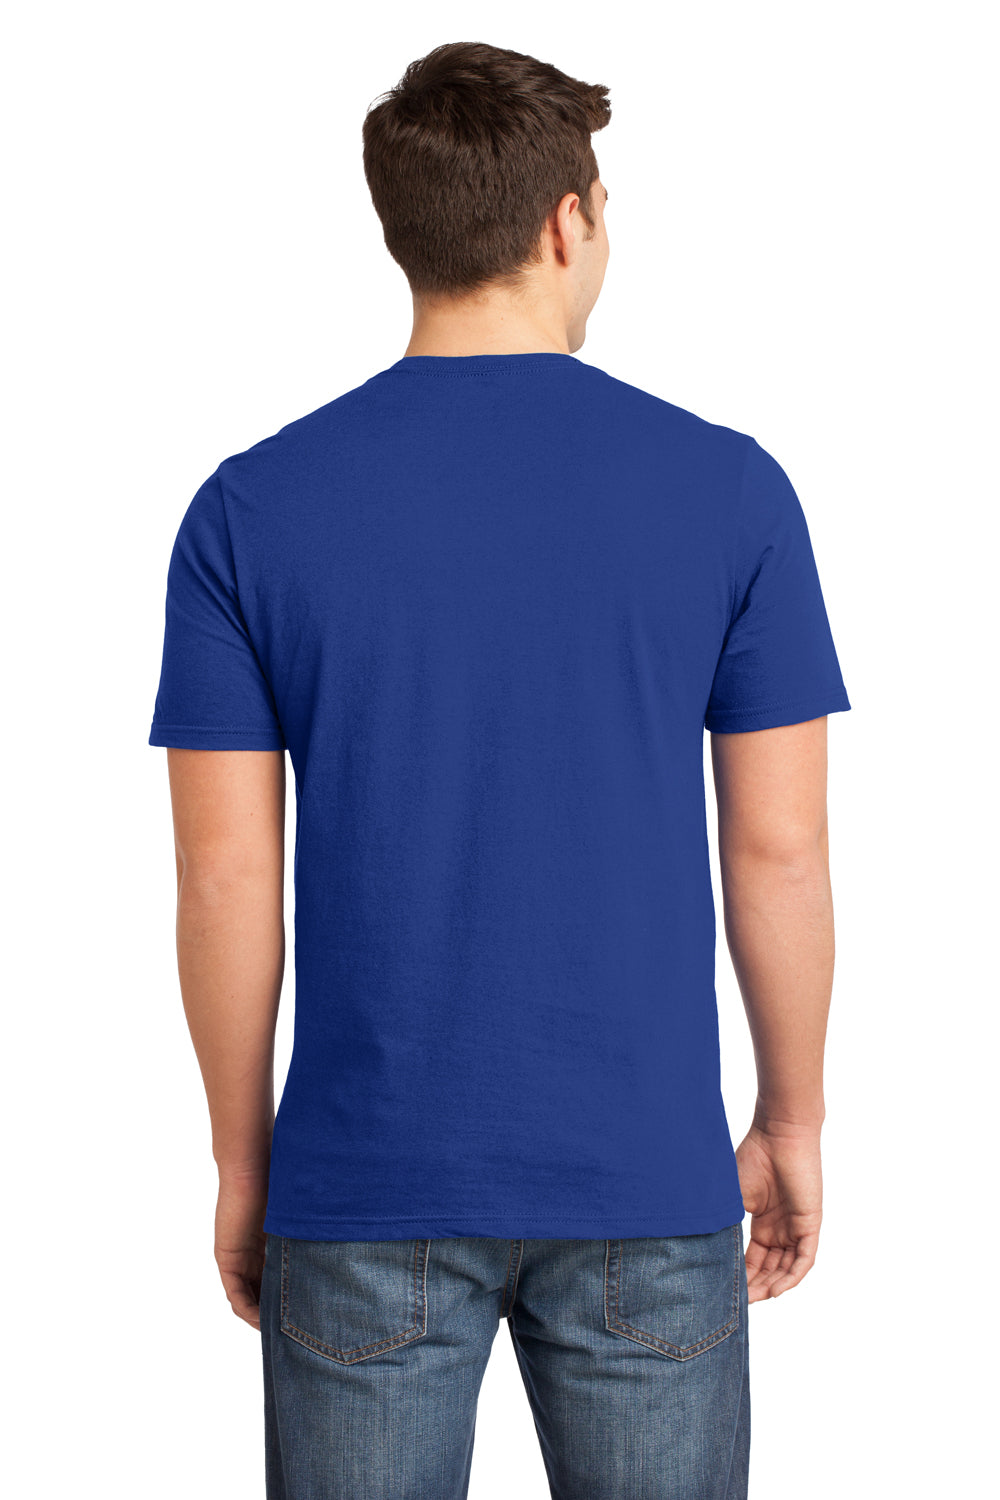 District DT6000 Mens Very Important Short Sleeve Crewneck T-Shirt Royal Blue Back